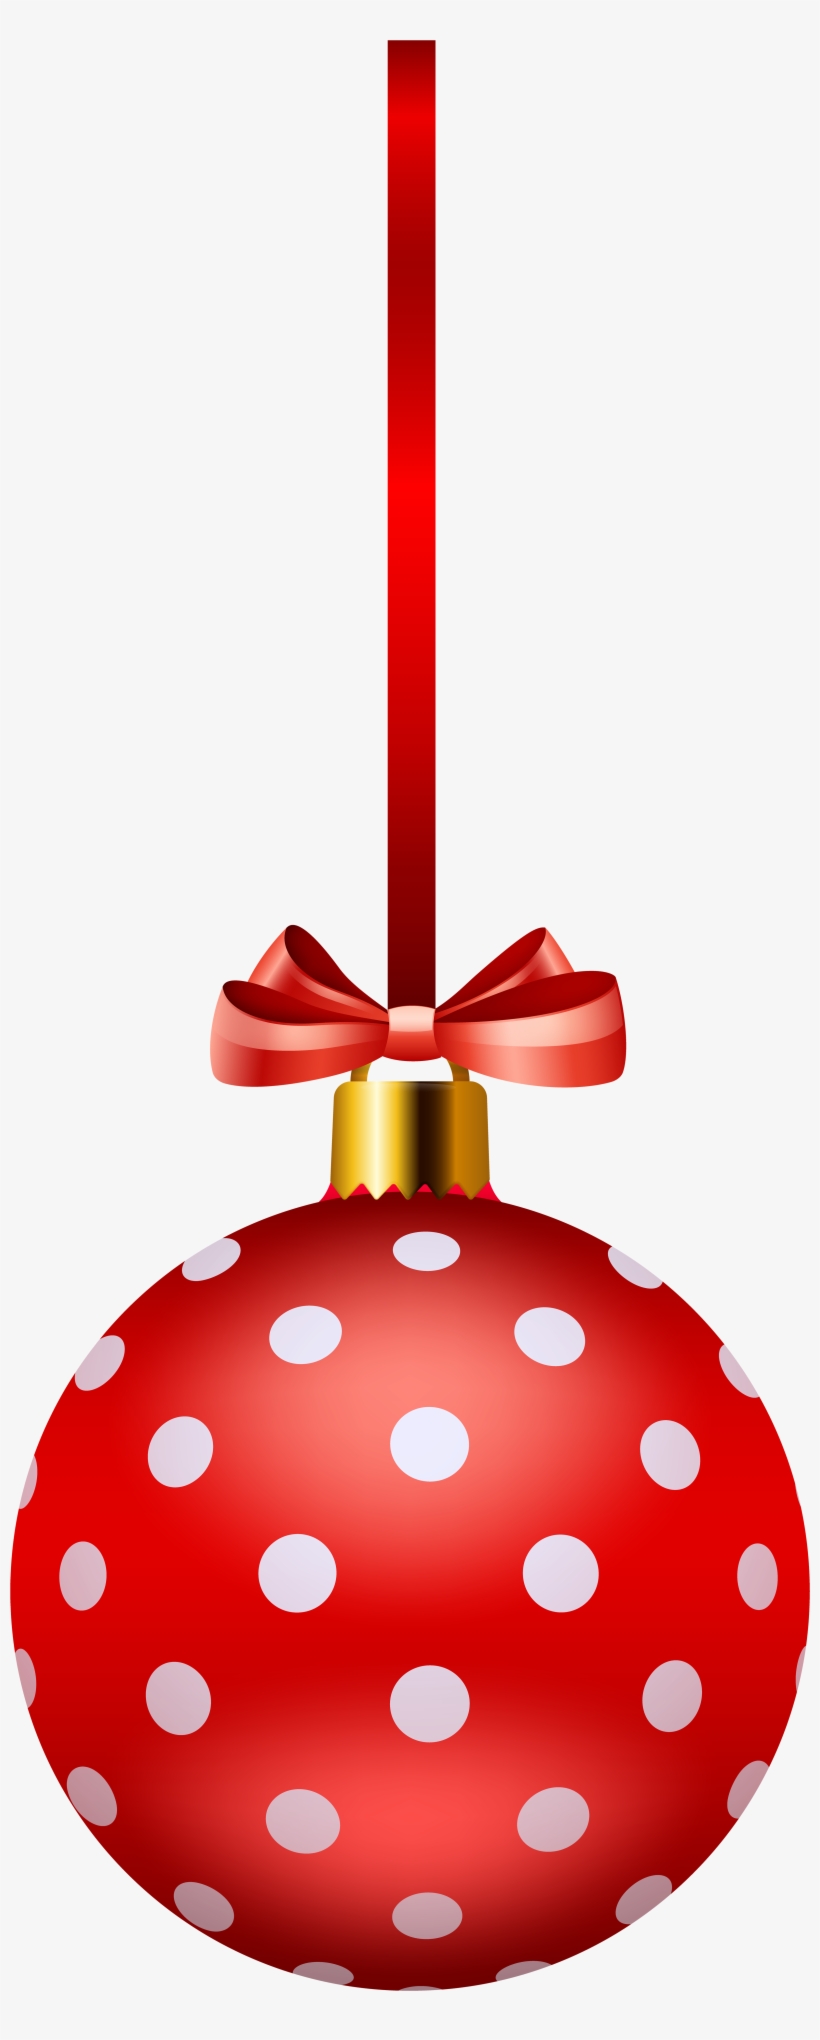 Christmas Ornaments Clipart Polka Dot - Polka Dot Christmas Free Clipart, transparent png #8935907